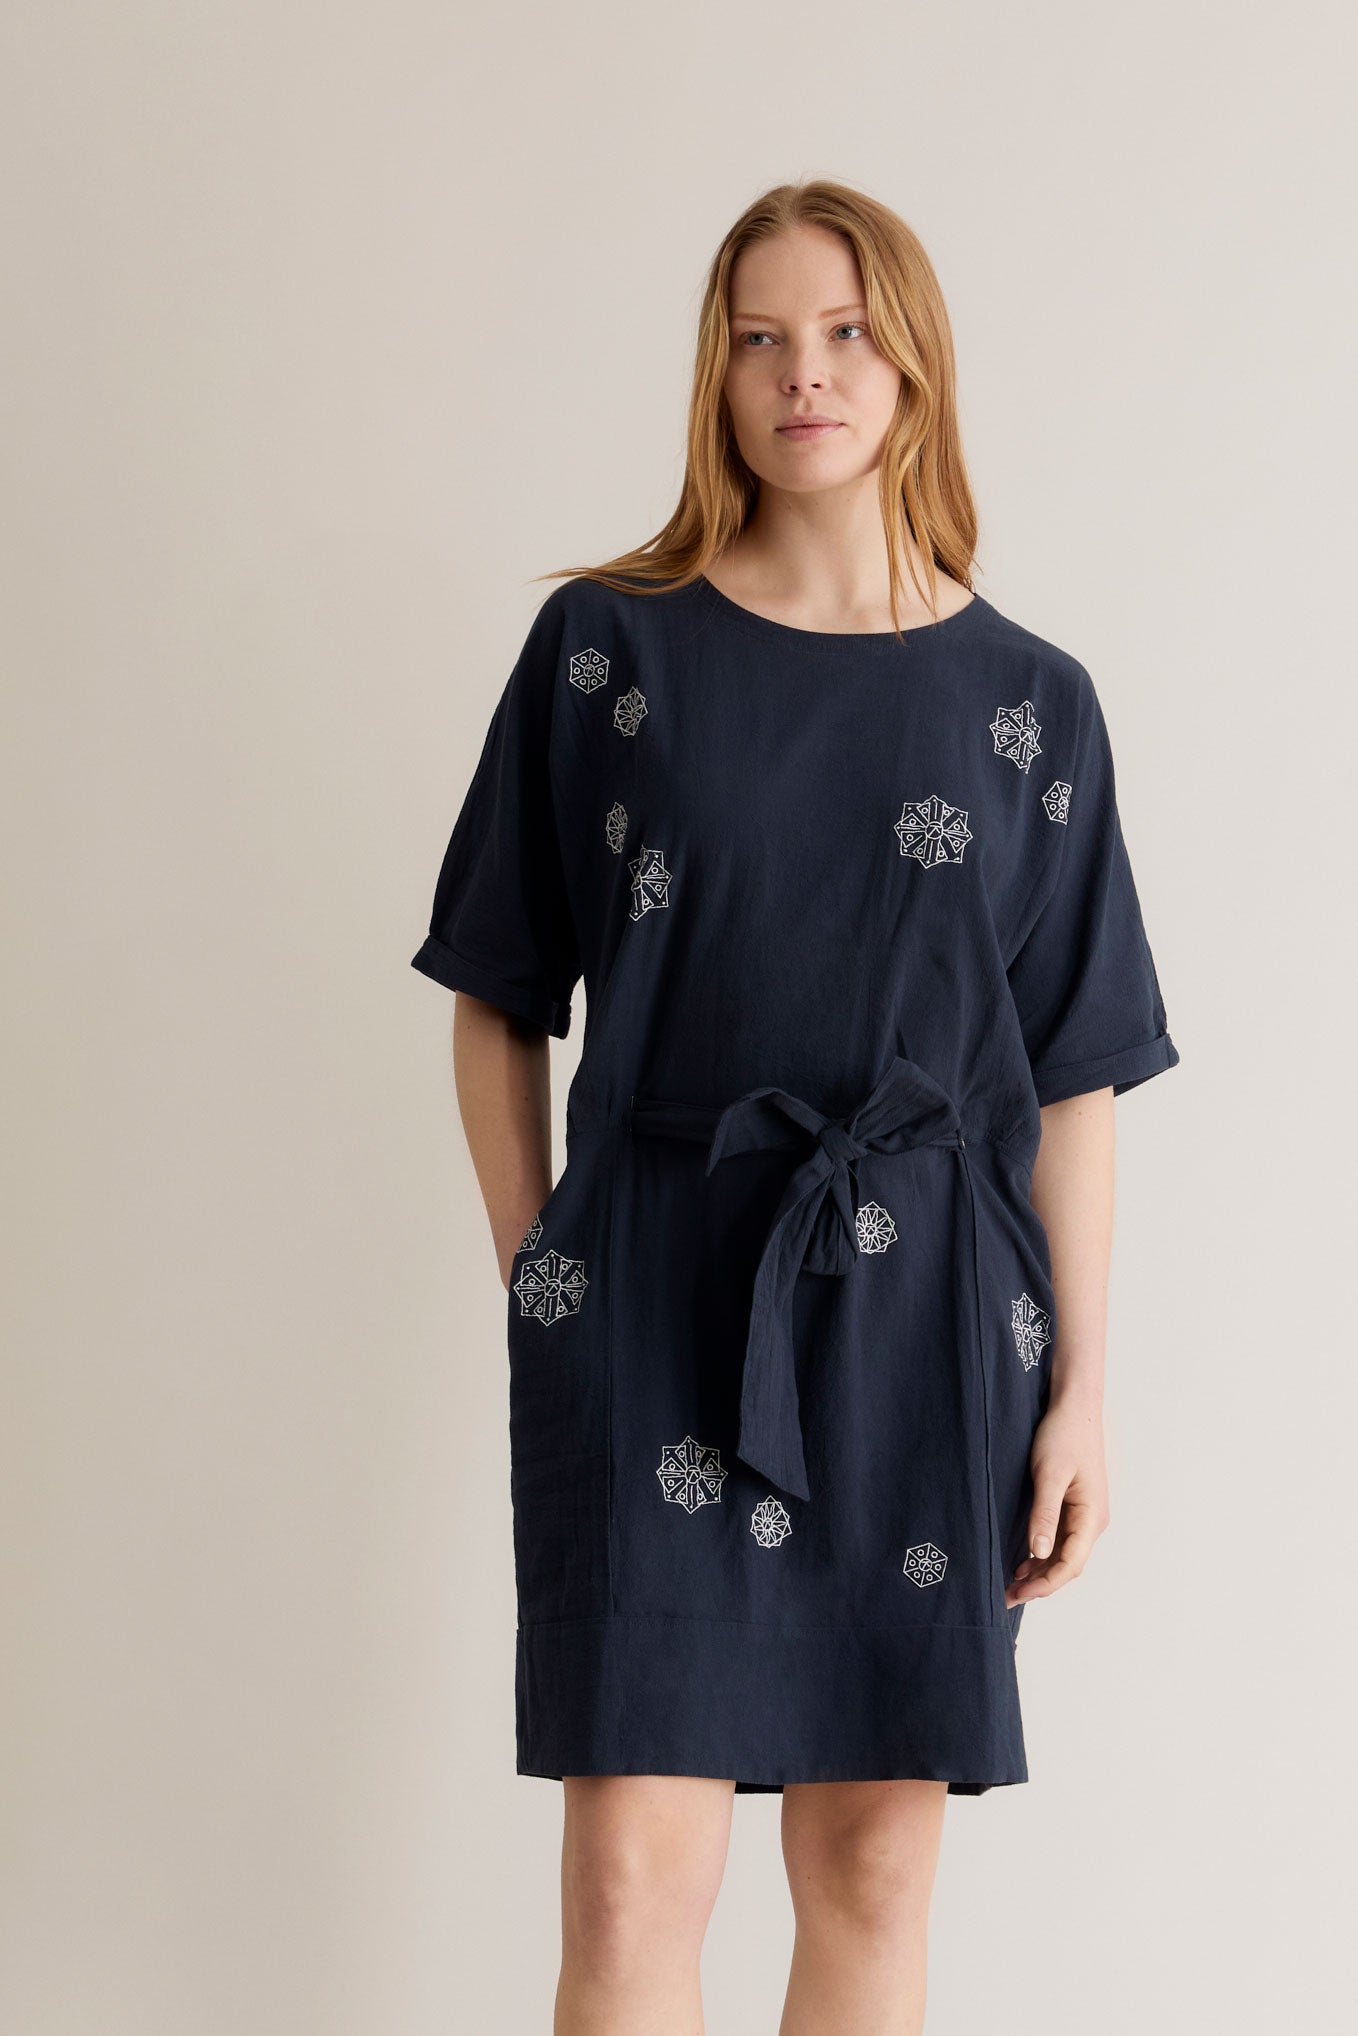 AKINA - Embroidered Organic Cotton Dress Navy